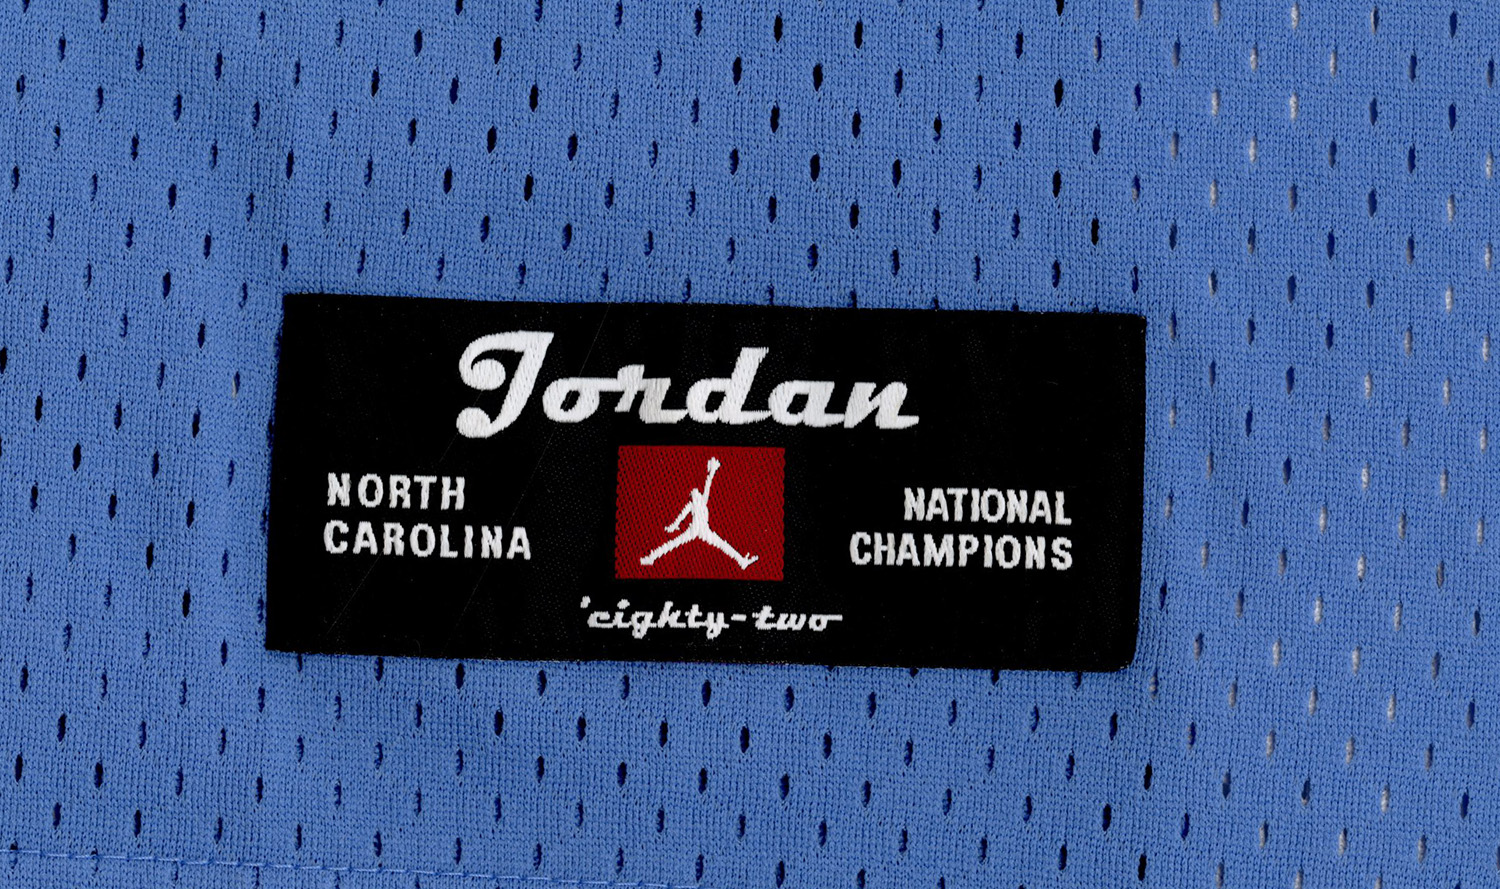 Michael Jordan Signed North Carolina Tar Heels Jersey (UDA COA)